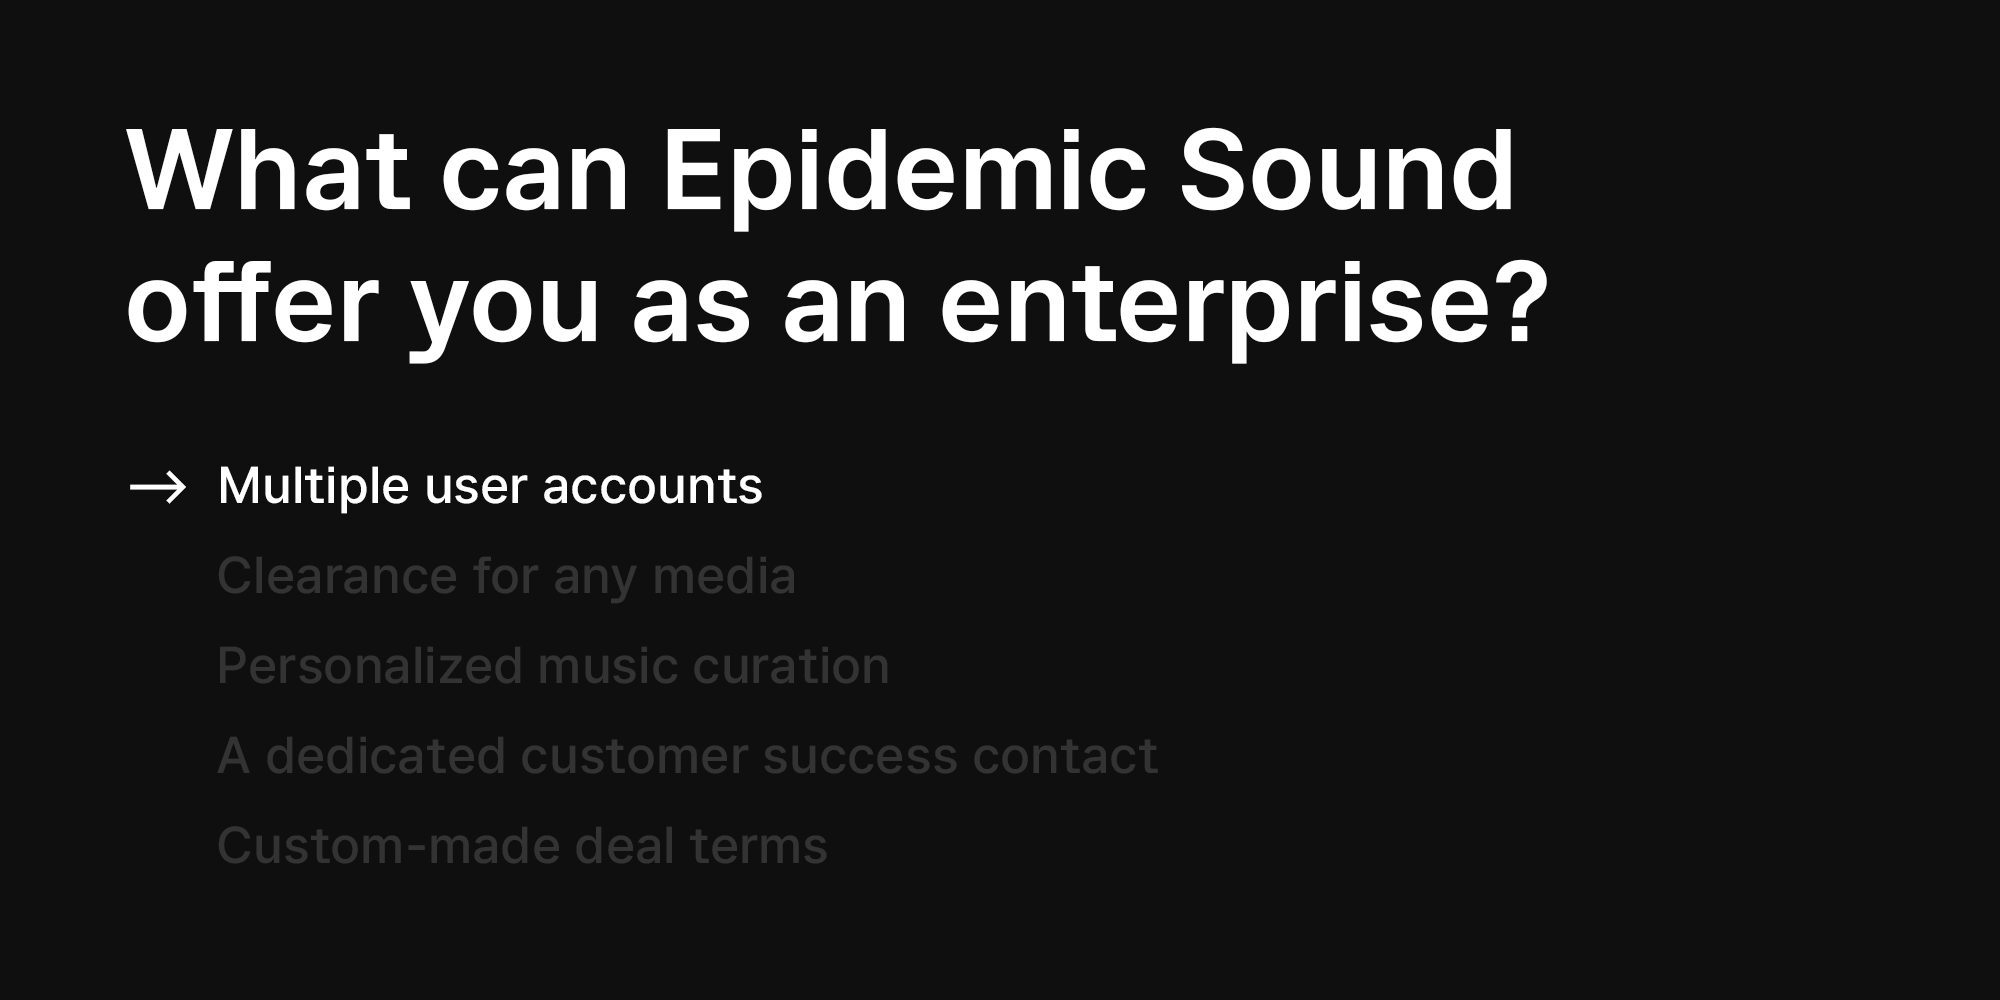 Epidemic Sound enterprise 